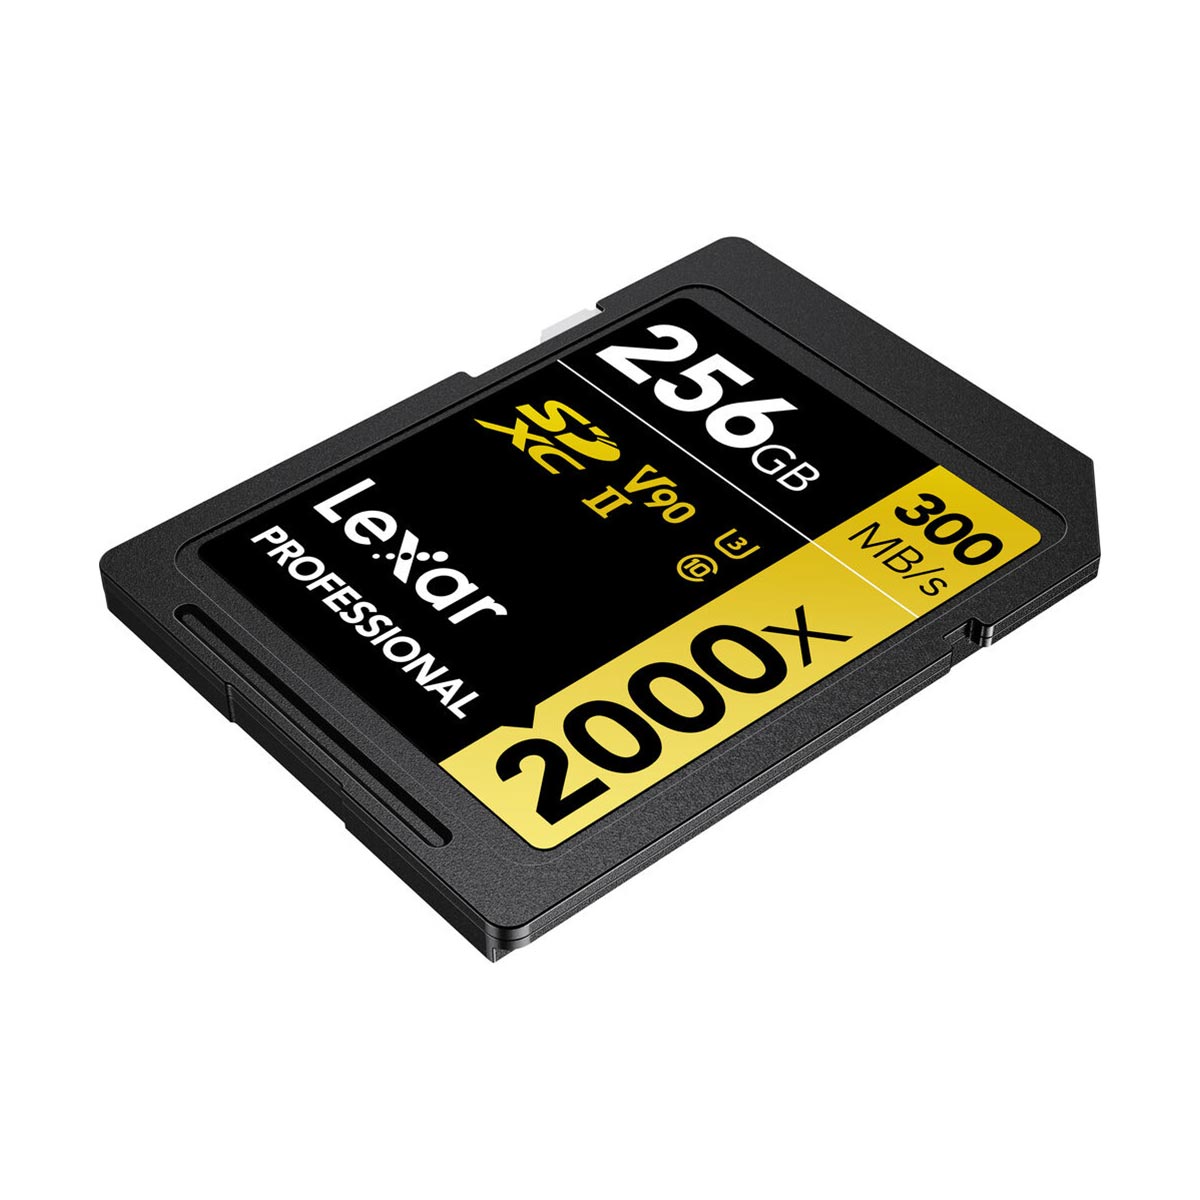 Lexar 256GB Professional 2000x UHS-II SDXC (V90) Memory Card